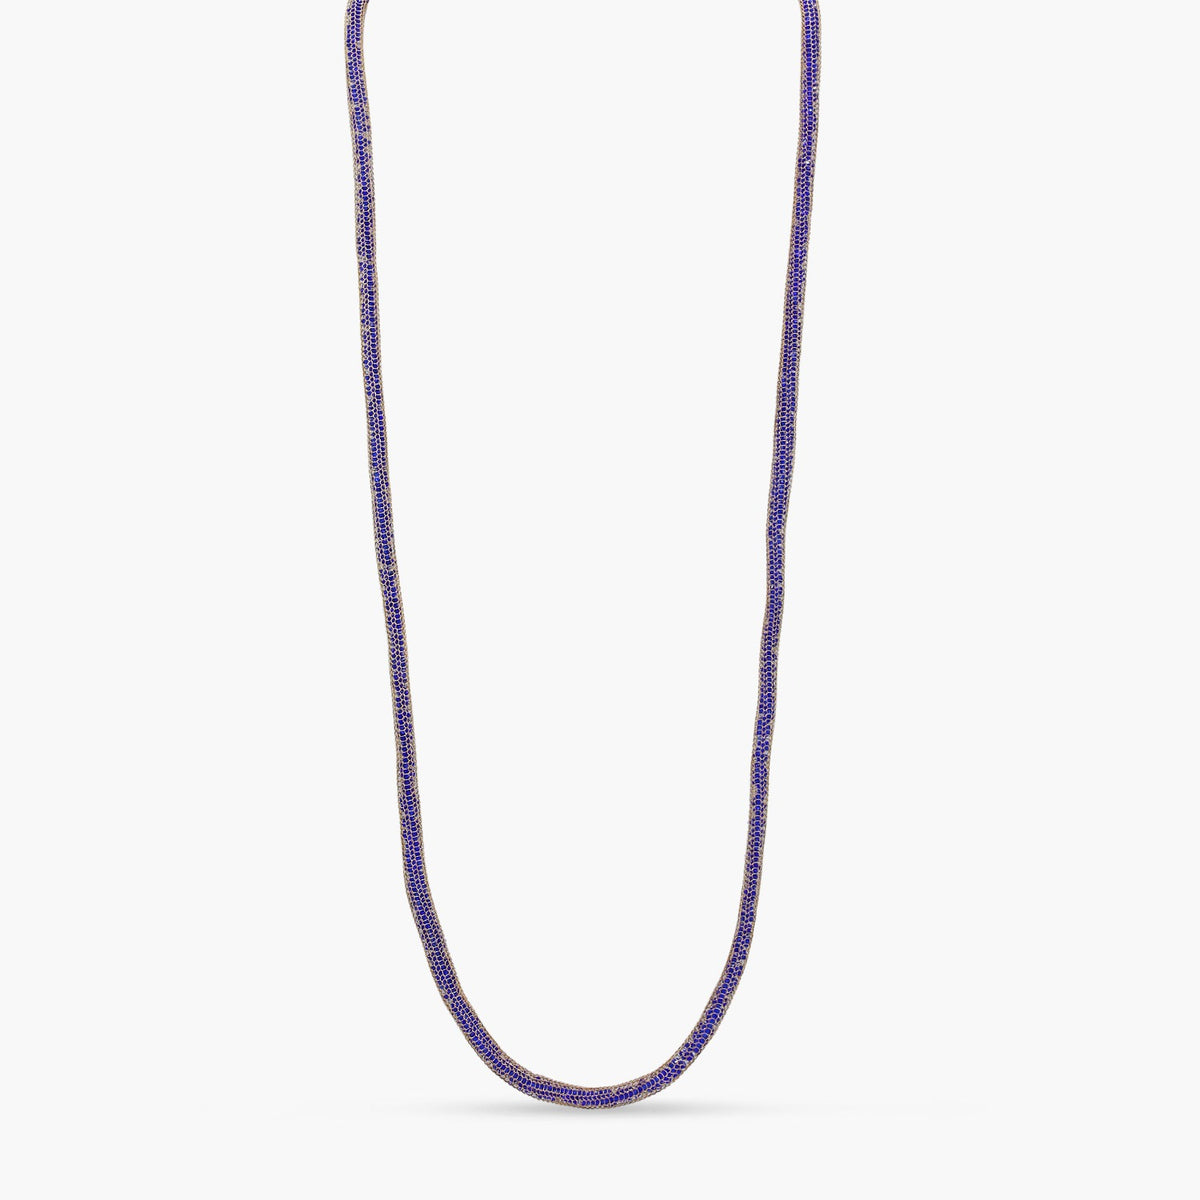 Round Mesh Chain Necklace